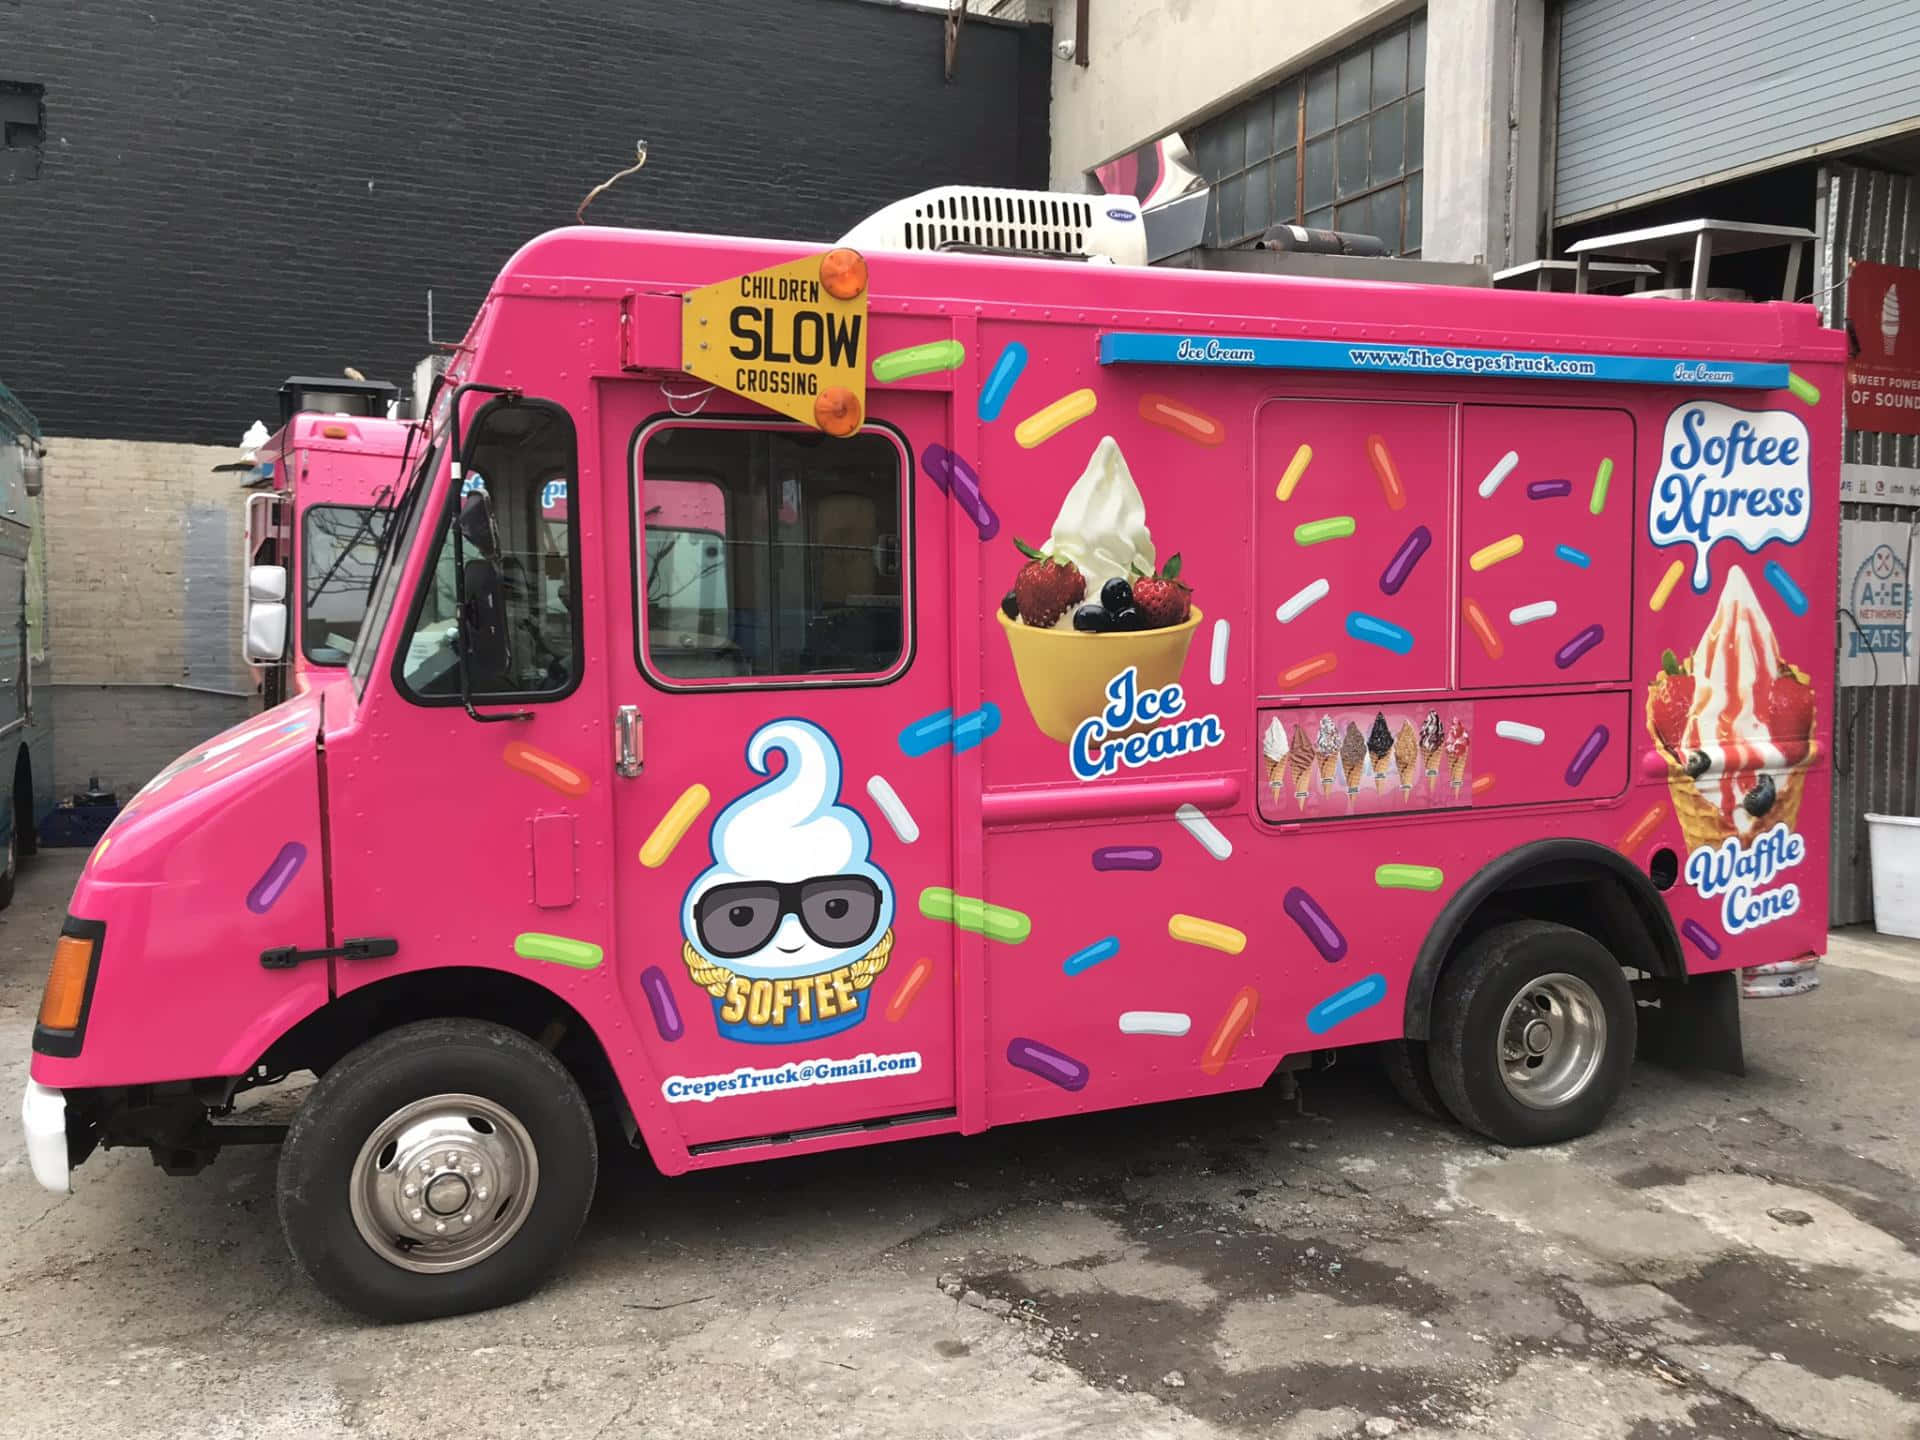 Enjoy Tasty Ice Cream Treats at Our Friendly Ice Cream Truck